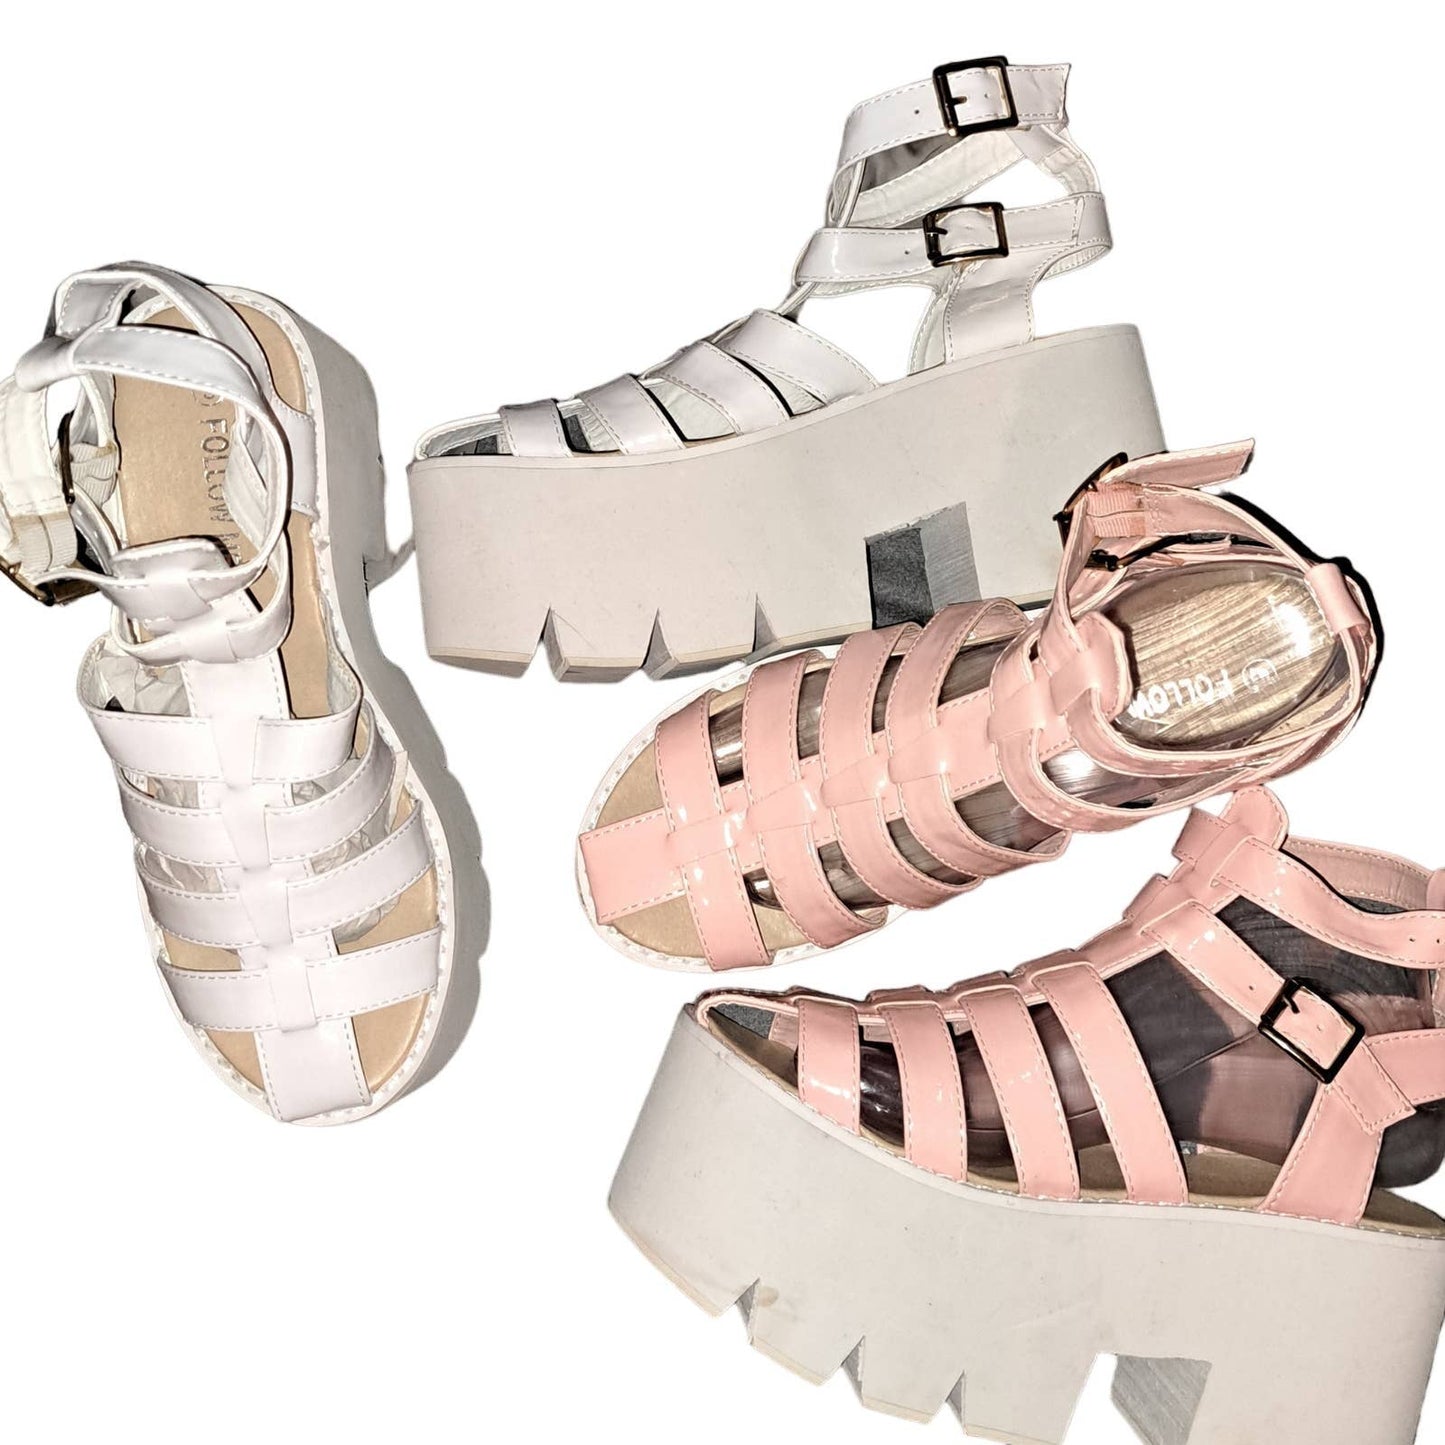 NEW Super Tall Platform sandals - peach and white SZ 5